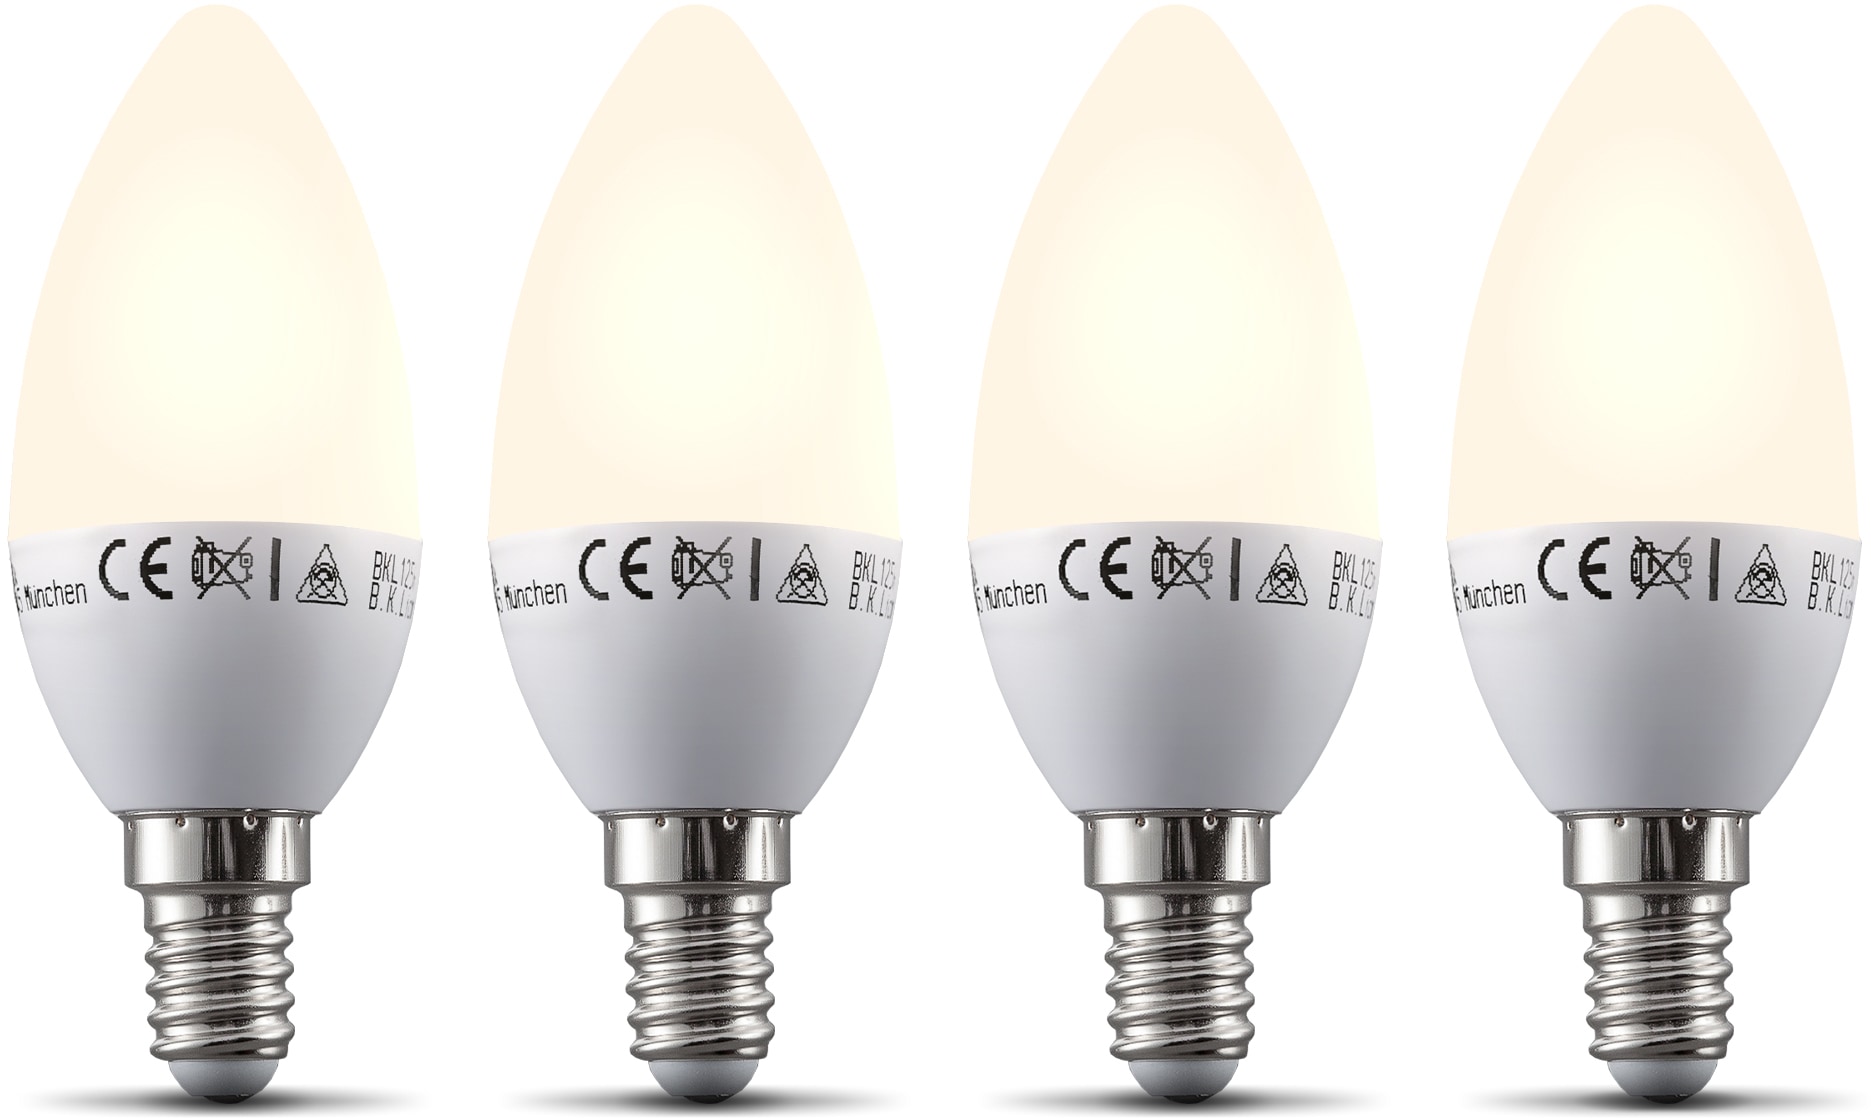 B.K.Licht LED-Leuchtmittel, E14, 4 St., Warmweiß, Smart Home LED-Lampe, RGB, WiFi, App-Steuerung, dimmbar